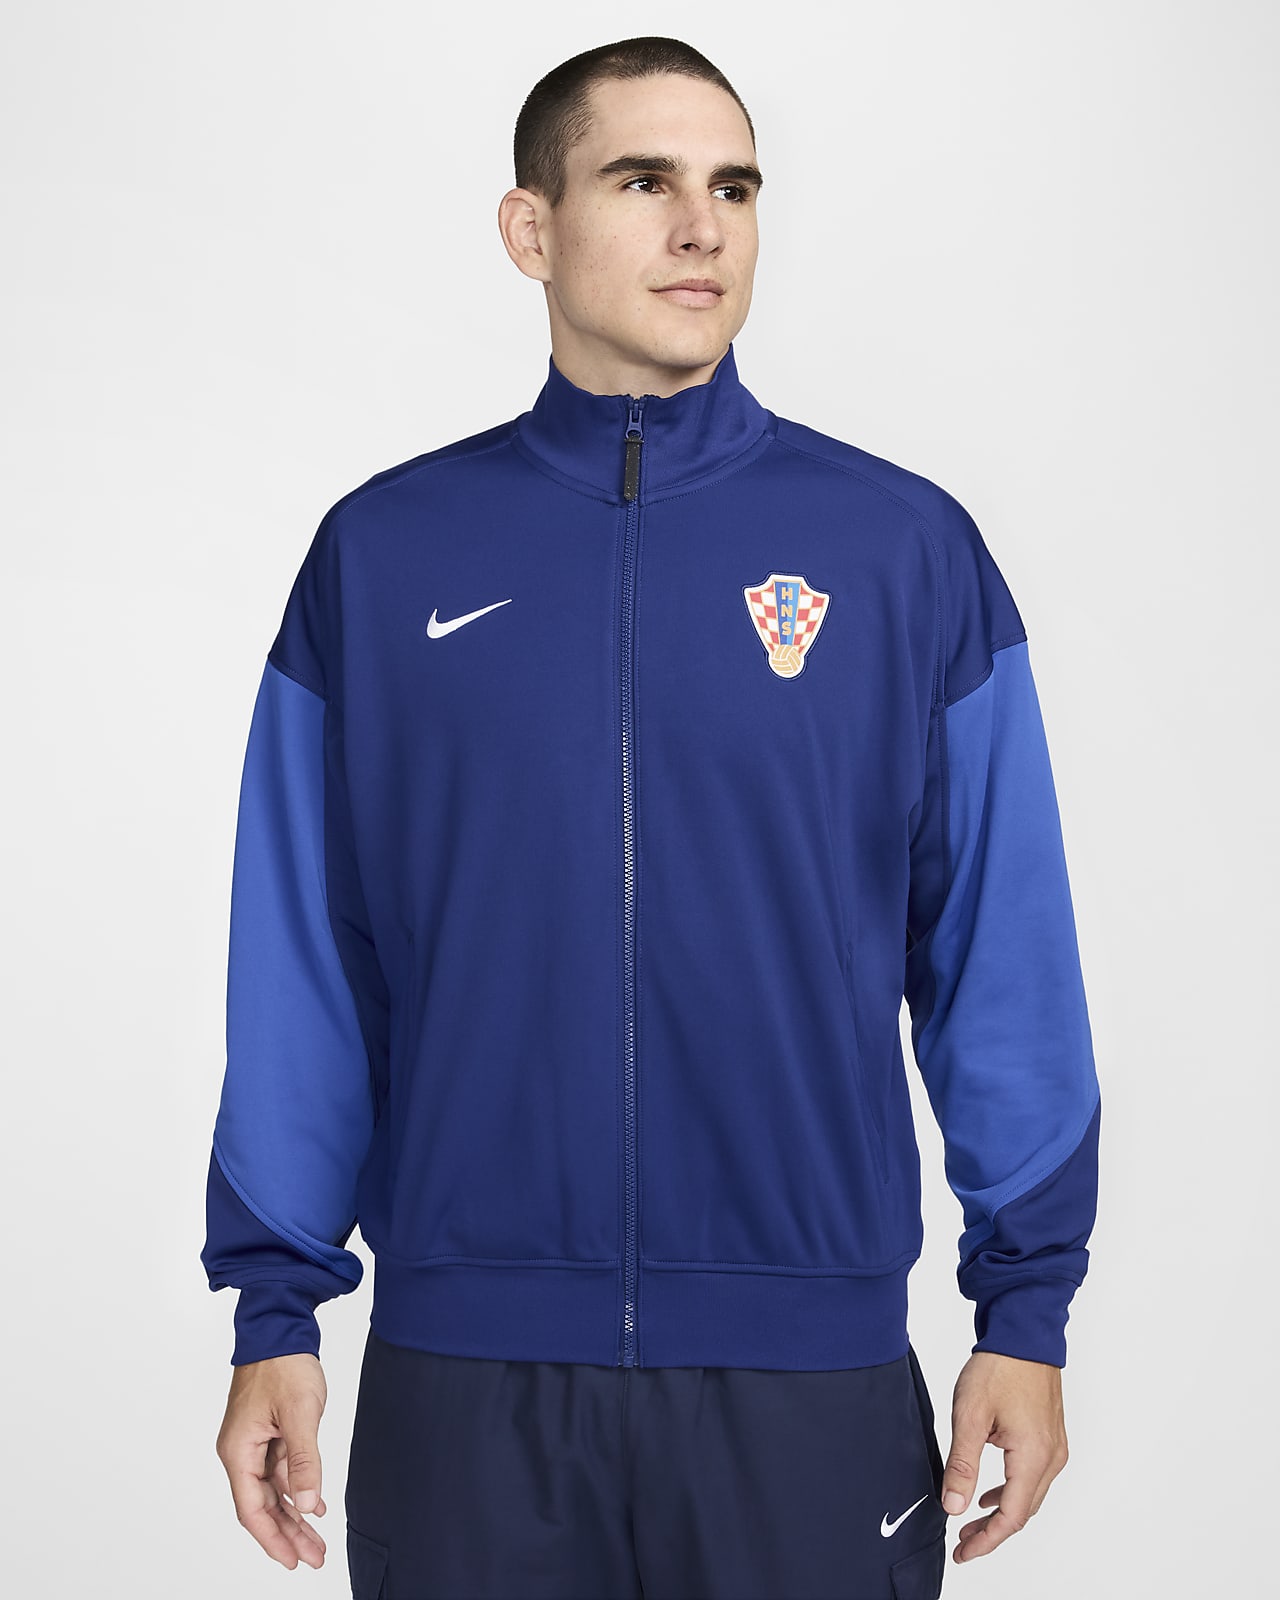 Croacia Academy Pro Chaqueta de fútbol Nike - Hombre